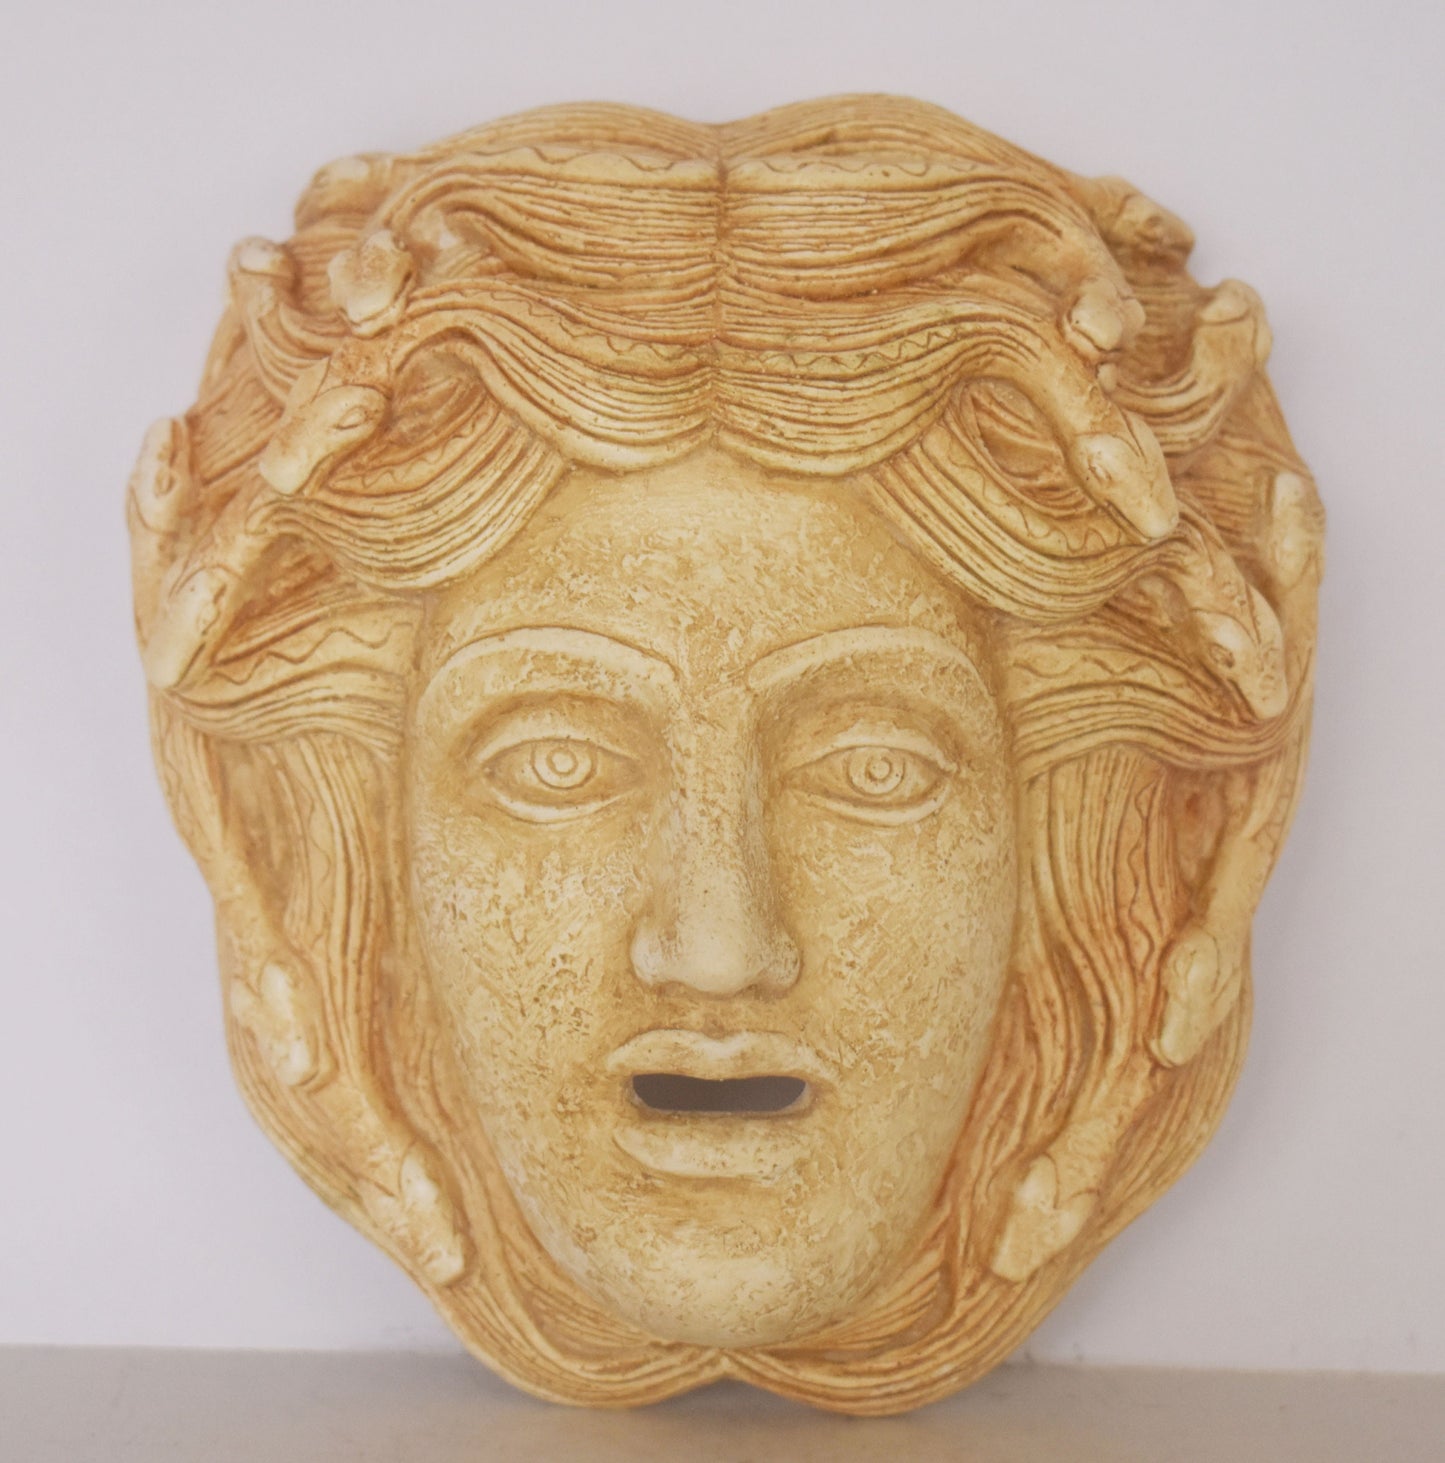 Medusa Mask - Gorgo - Snake-Haired Gorgon - Snake Lady - Monster Figure - Perseus and Athena Myth - Wall Decoration - Casting Stone